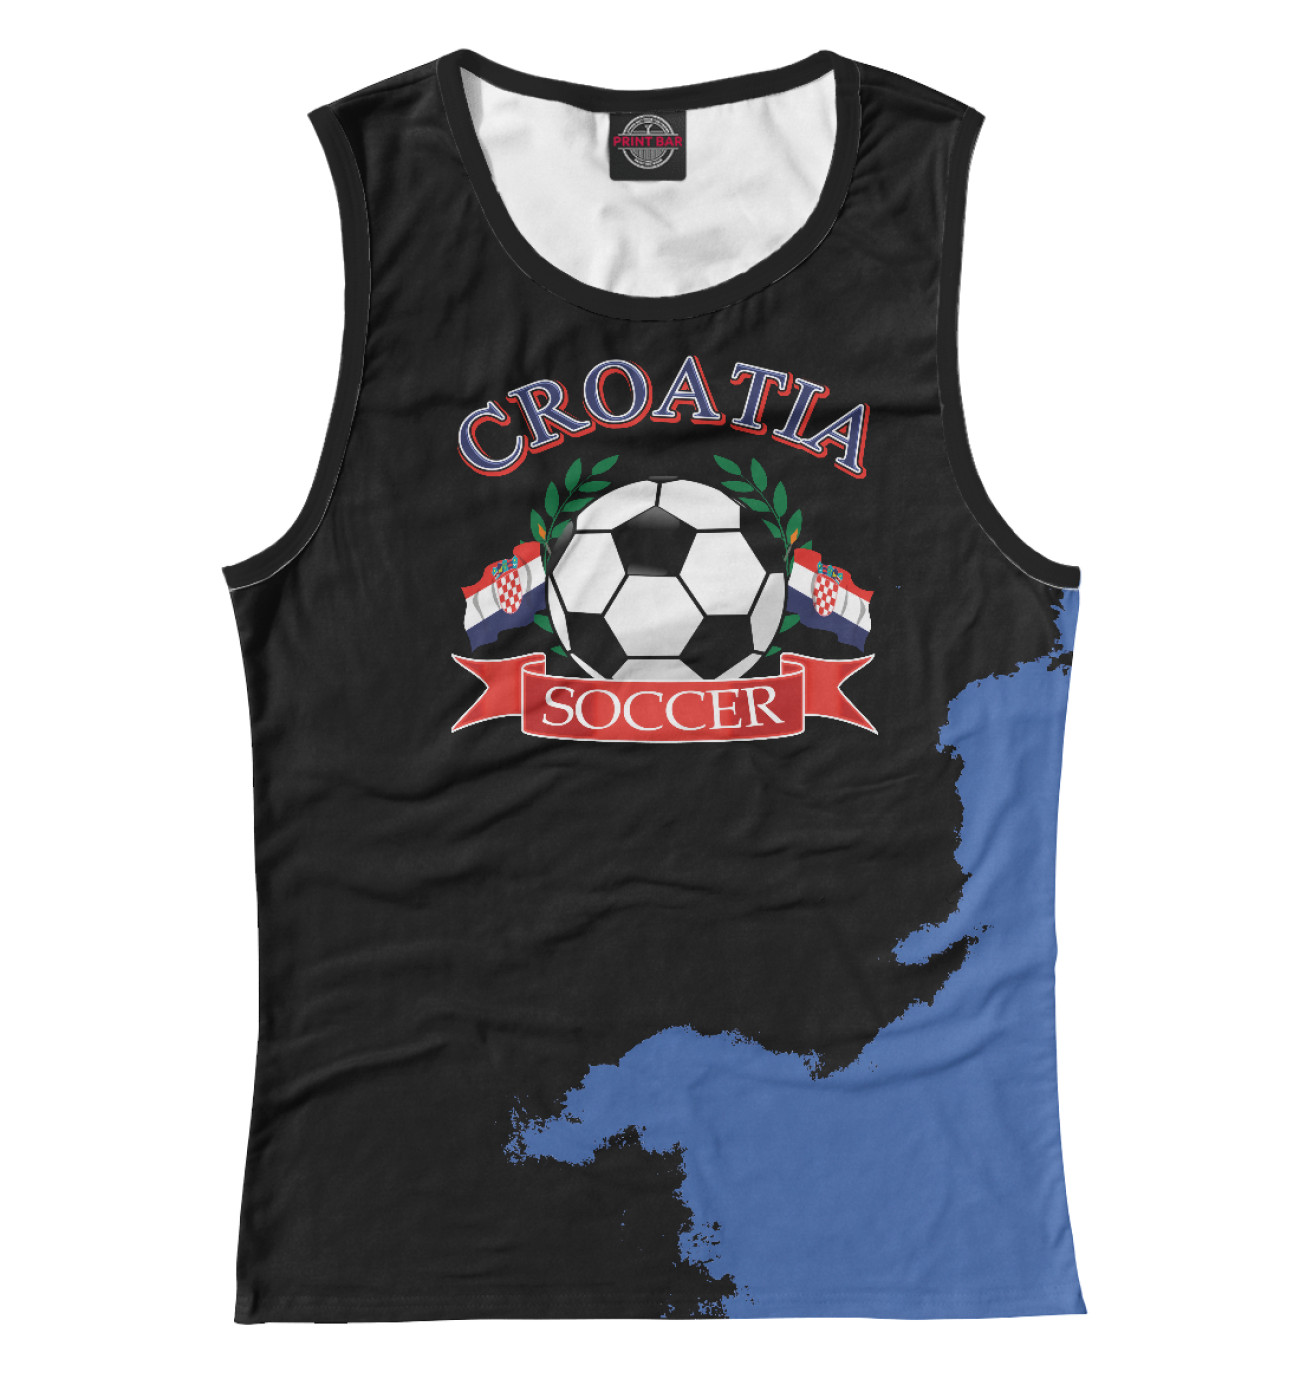 Женская Майка Croatia soccer ball, артикул: FTO-670002-may-1